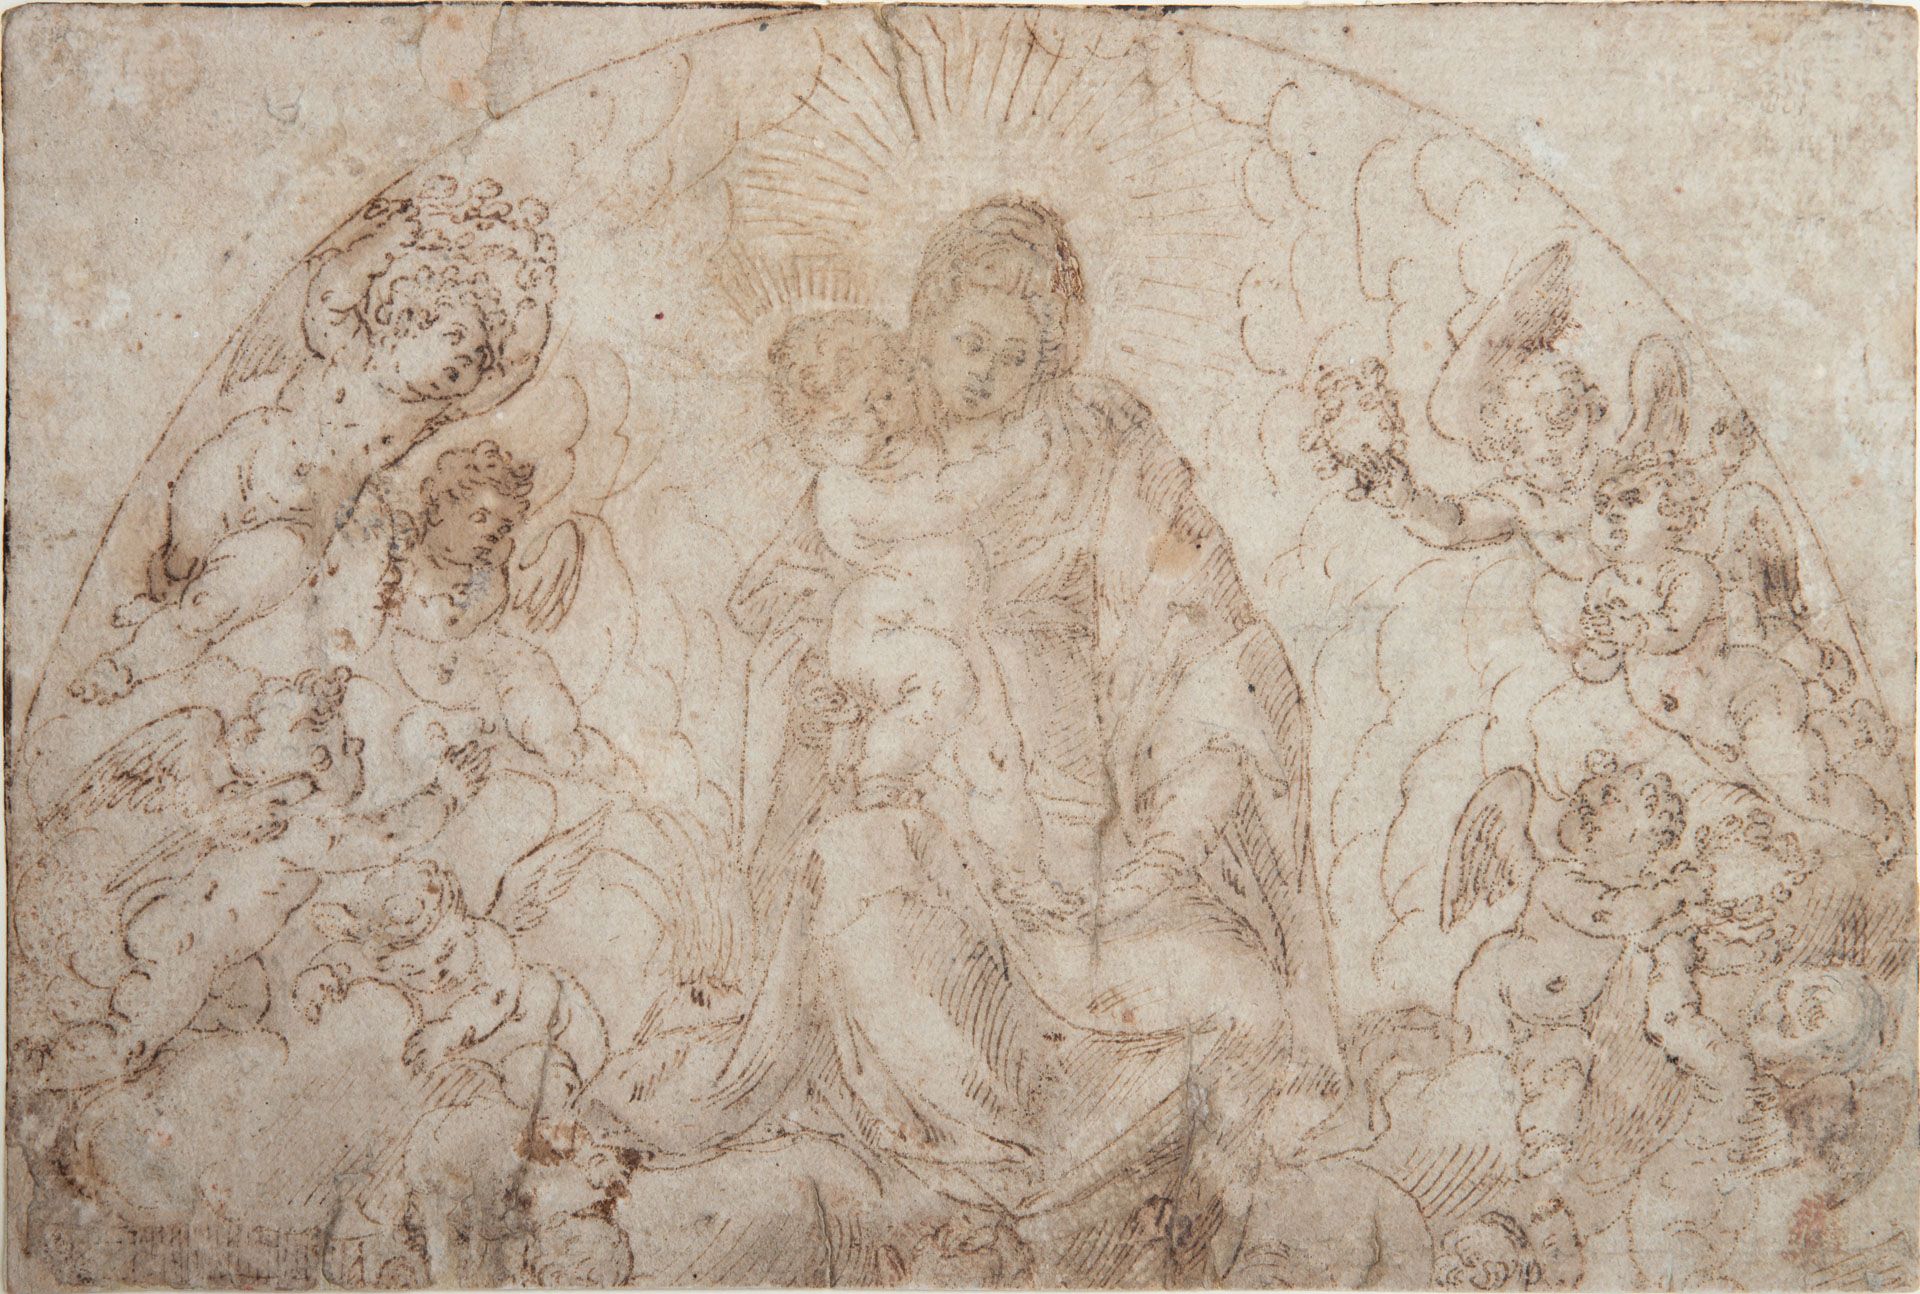 Attrib. Fra Bartolomeo (1472-1517), Madonna and Child